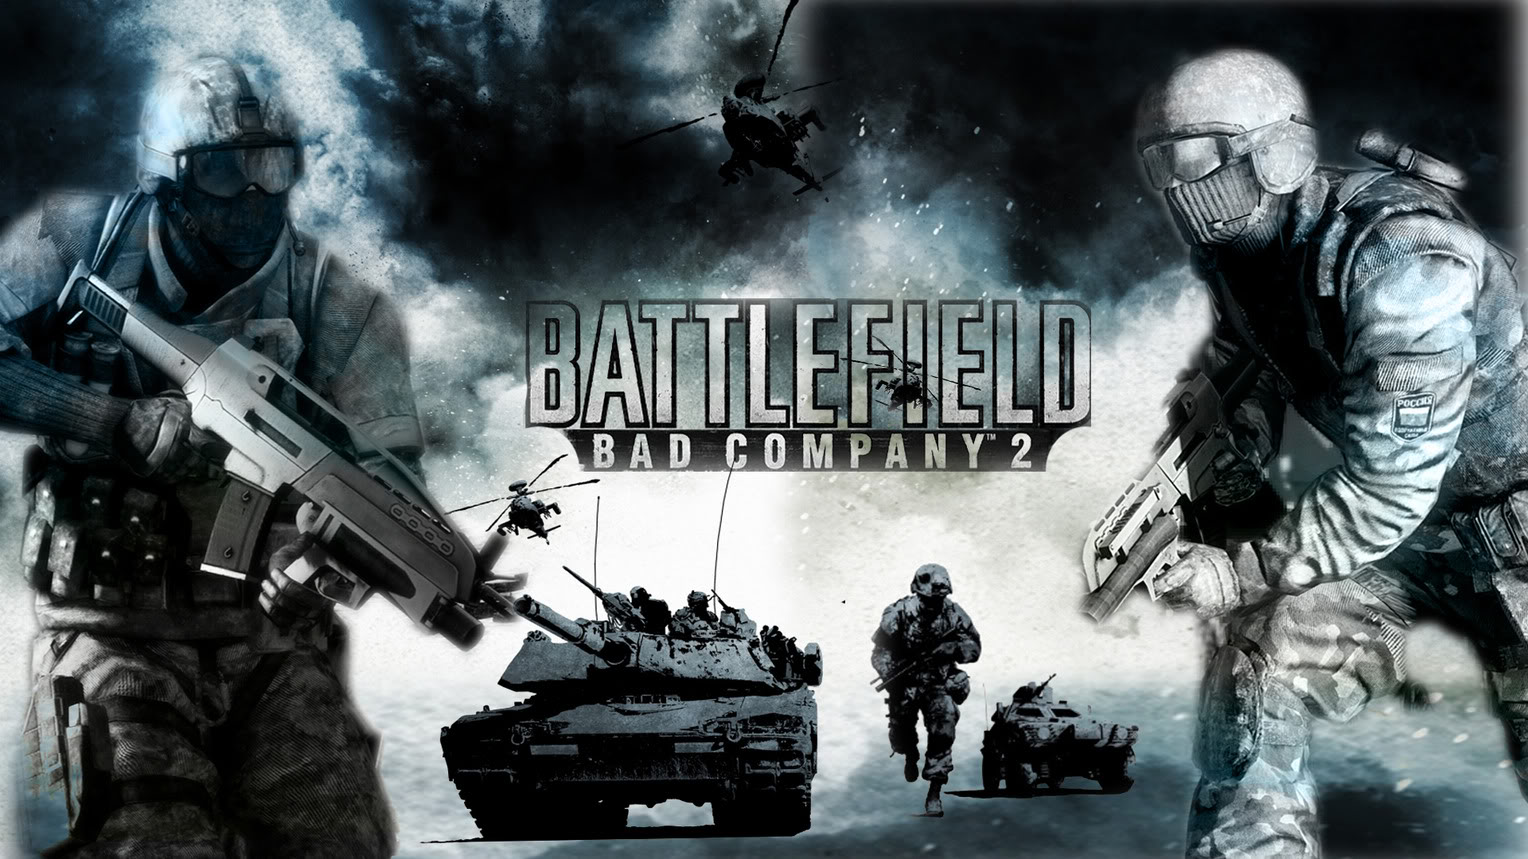 Battlefield Bad Company 2 Wallpaper #12 - Battlefield Informer Gallery